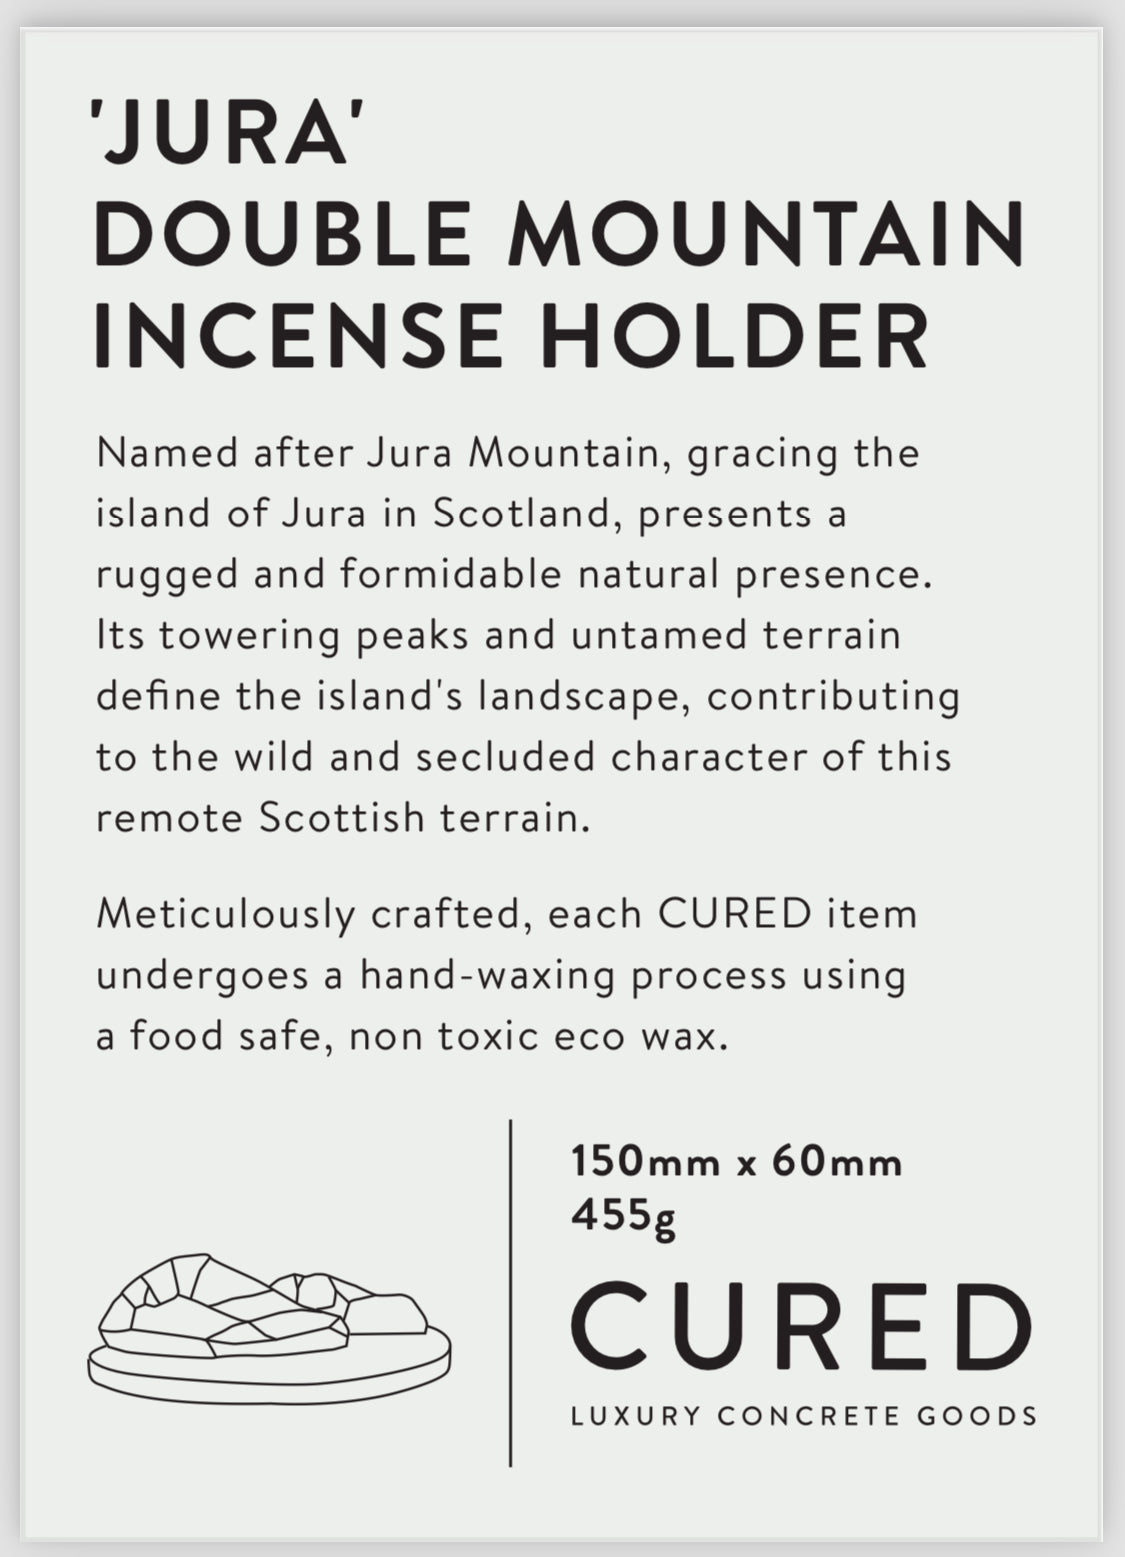 Jura Double Mountain Incense Holder